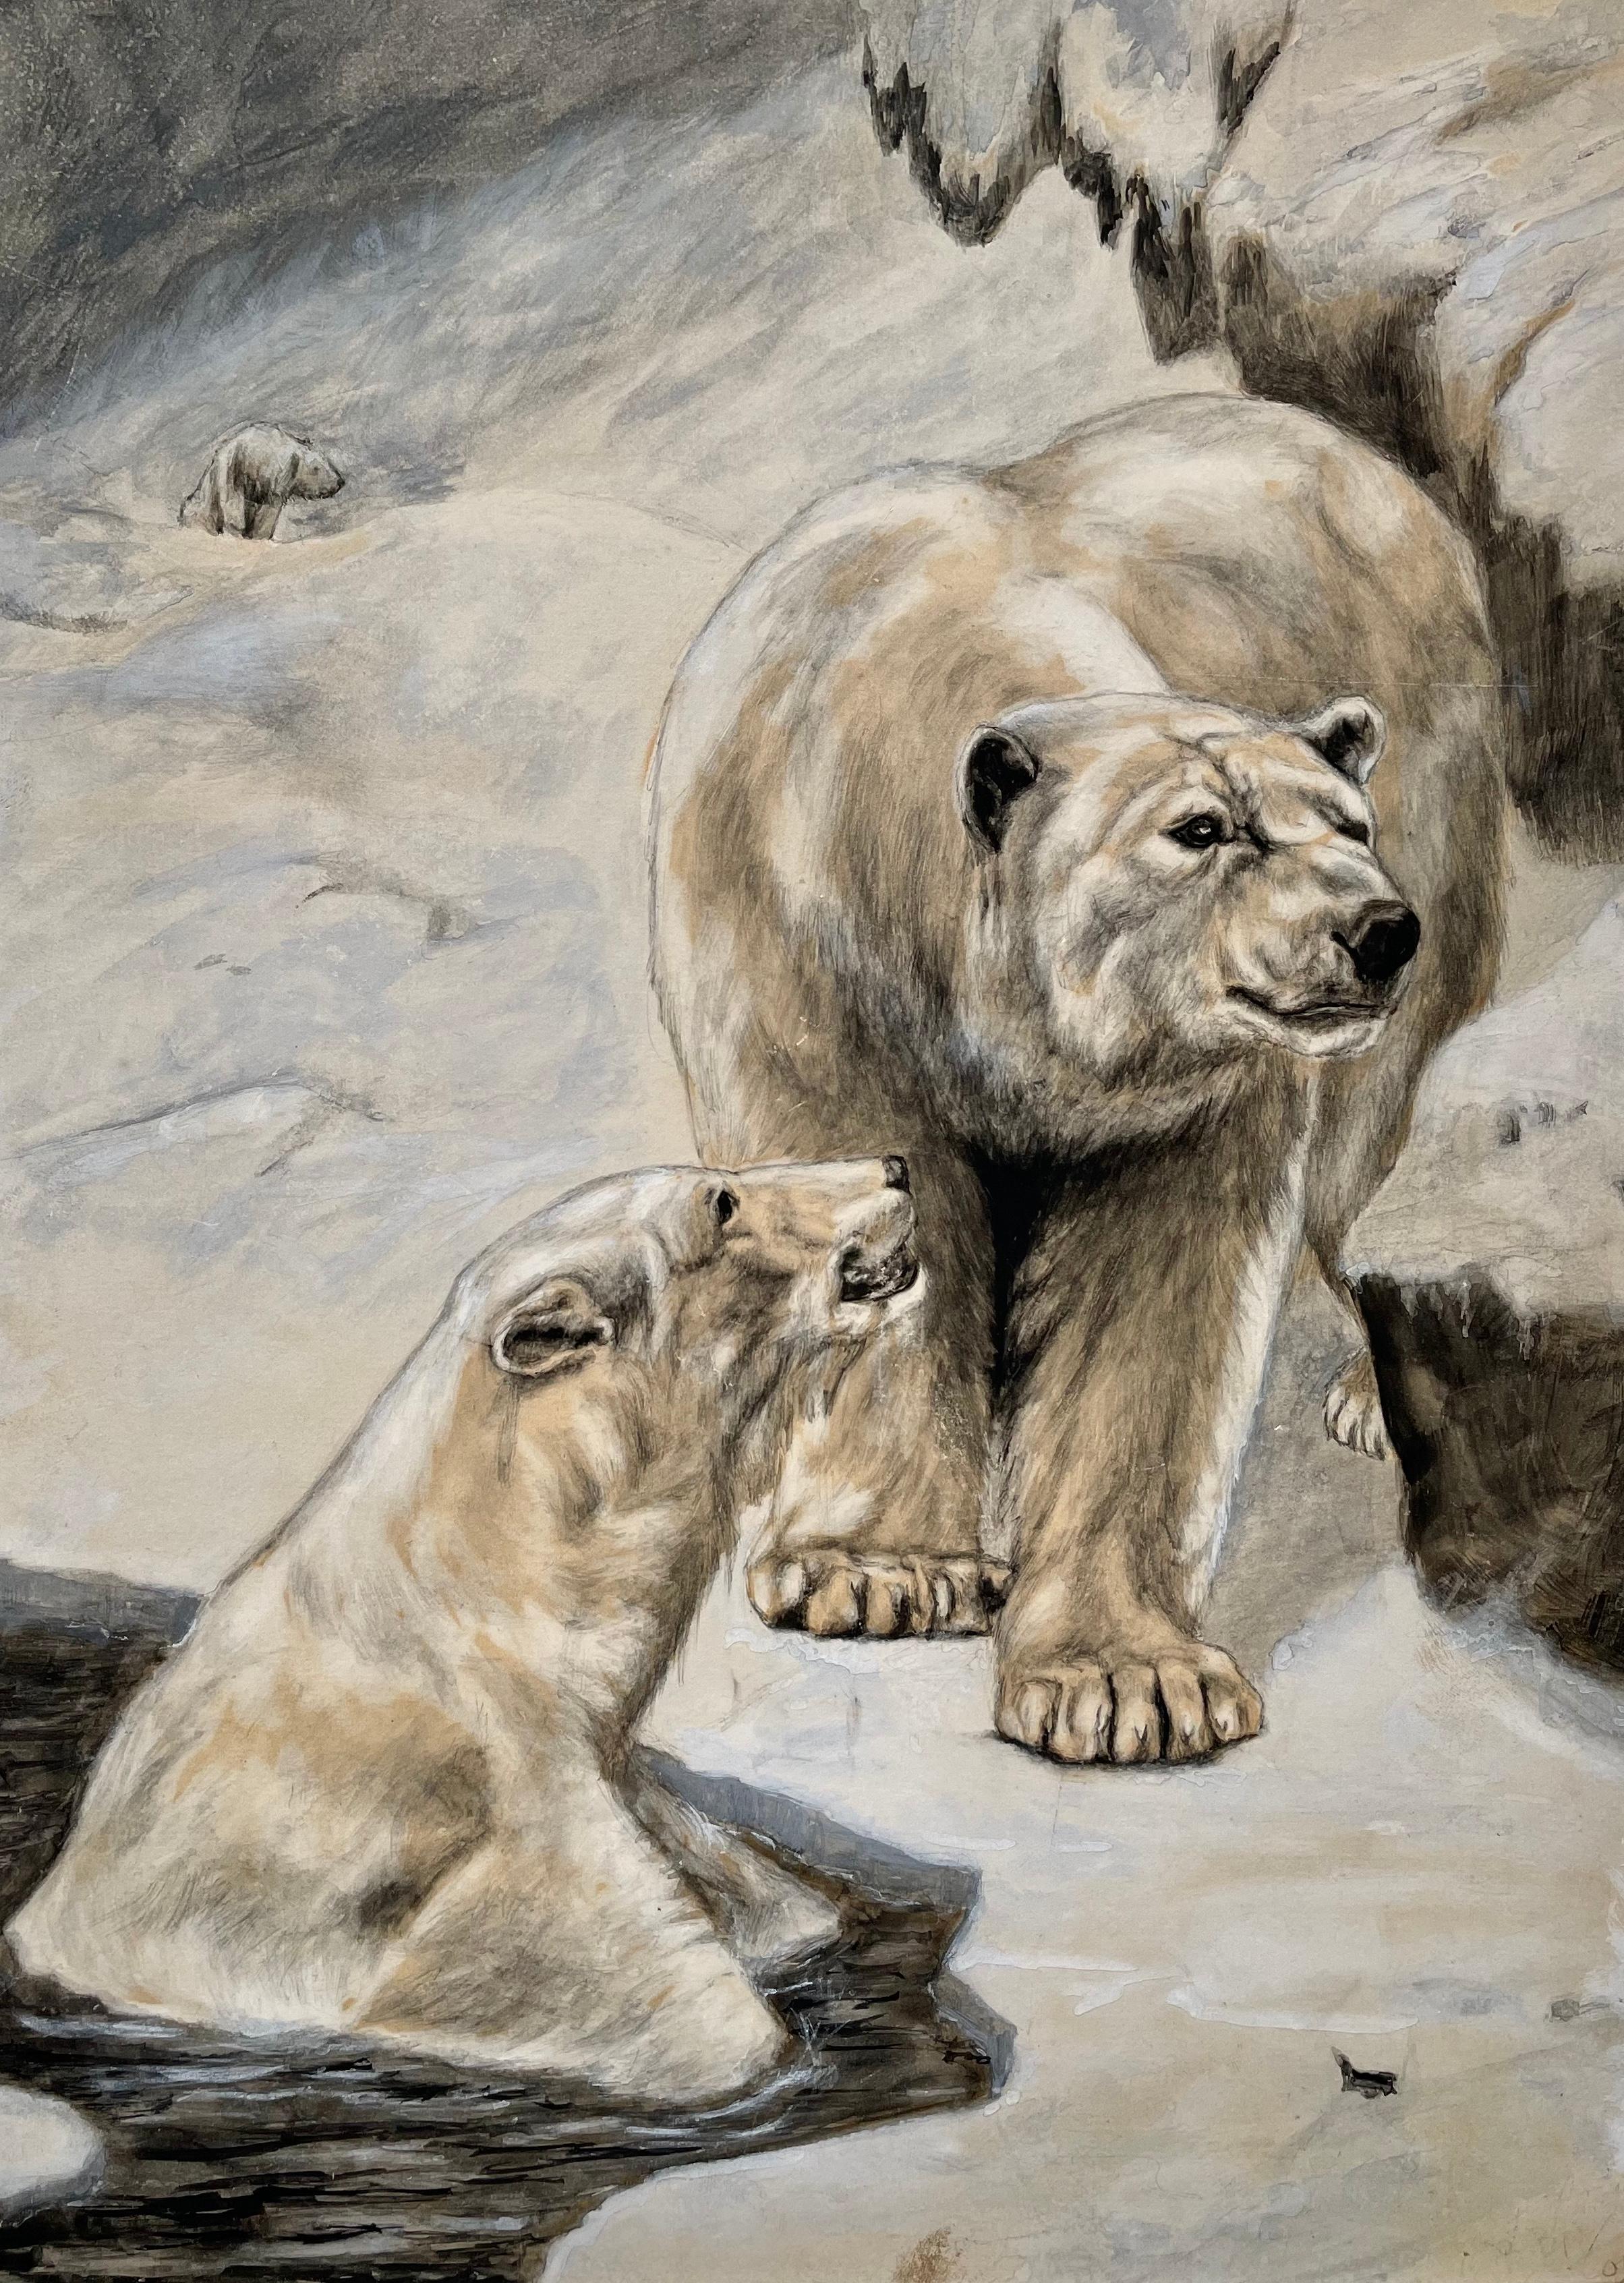 Alfred Adalbert Boese Animal Art - 1901 British watercolour illustration of Polar Bears by Alfred Boese